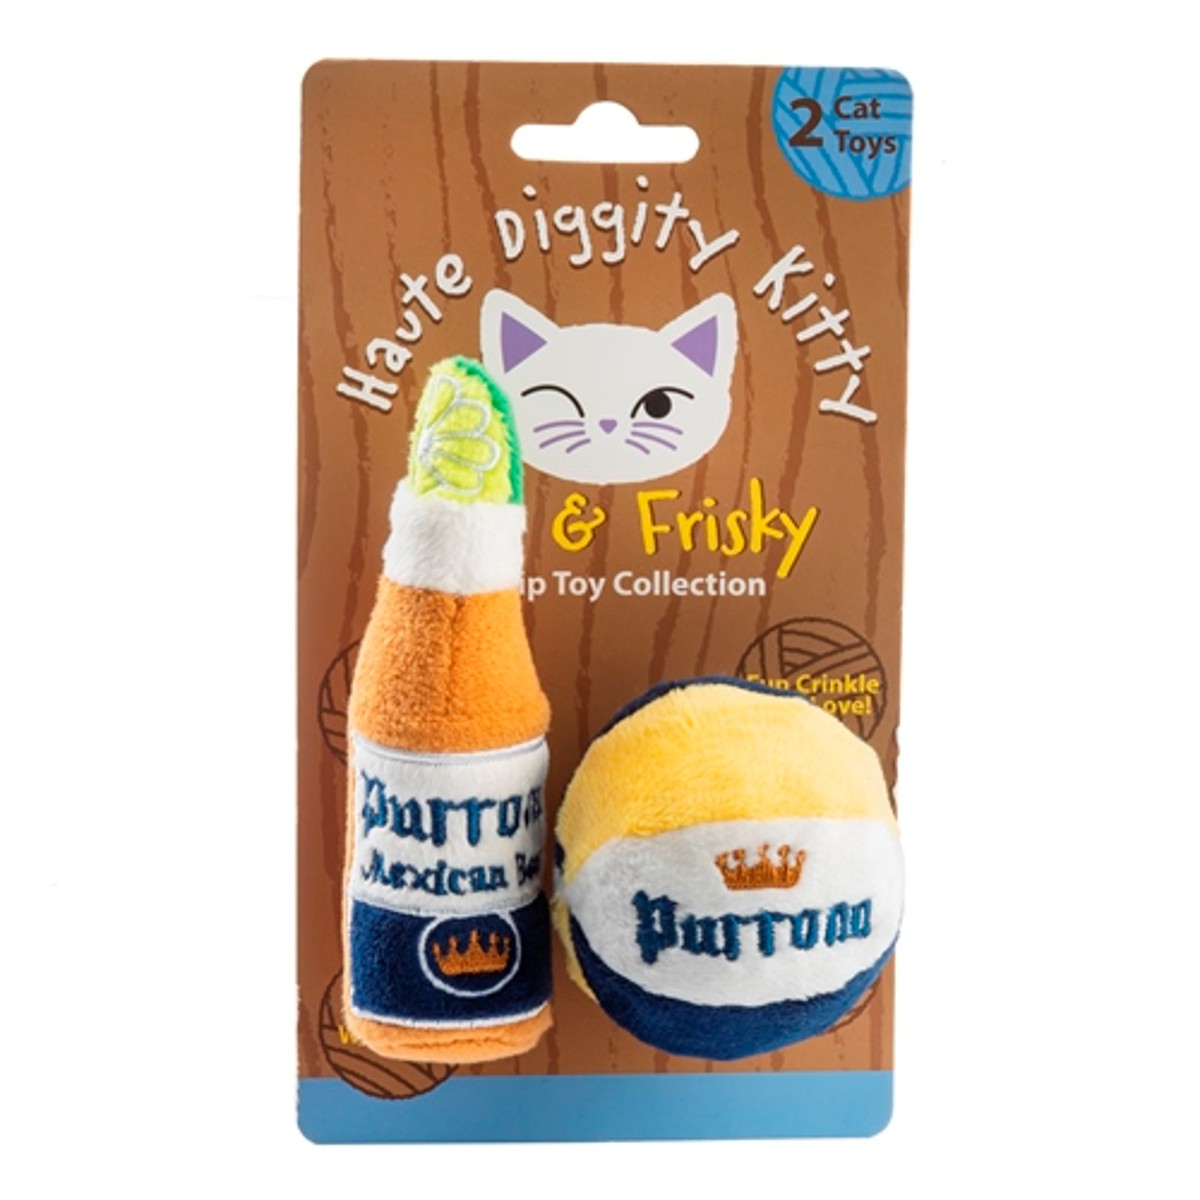 Haute Diggity Dog + Kitty Organic Catnip Cat Toys - Purrona (Bottle & Ball)